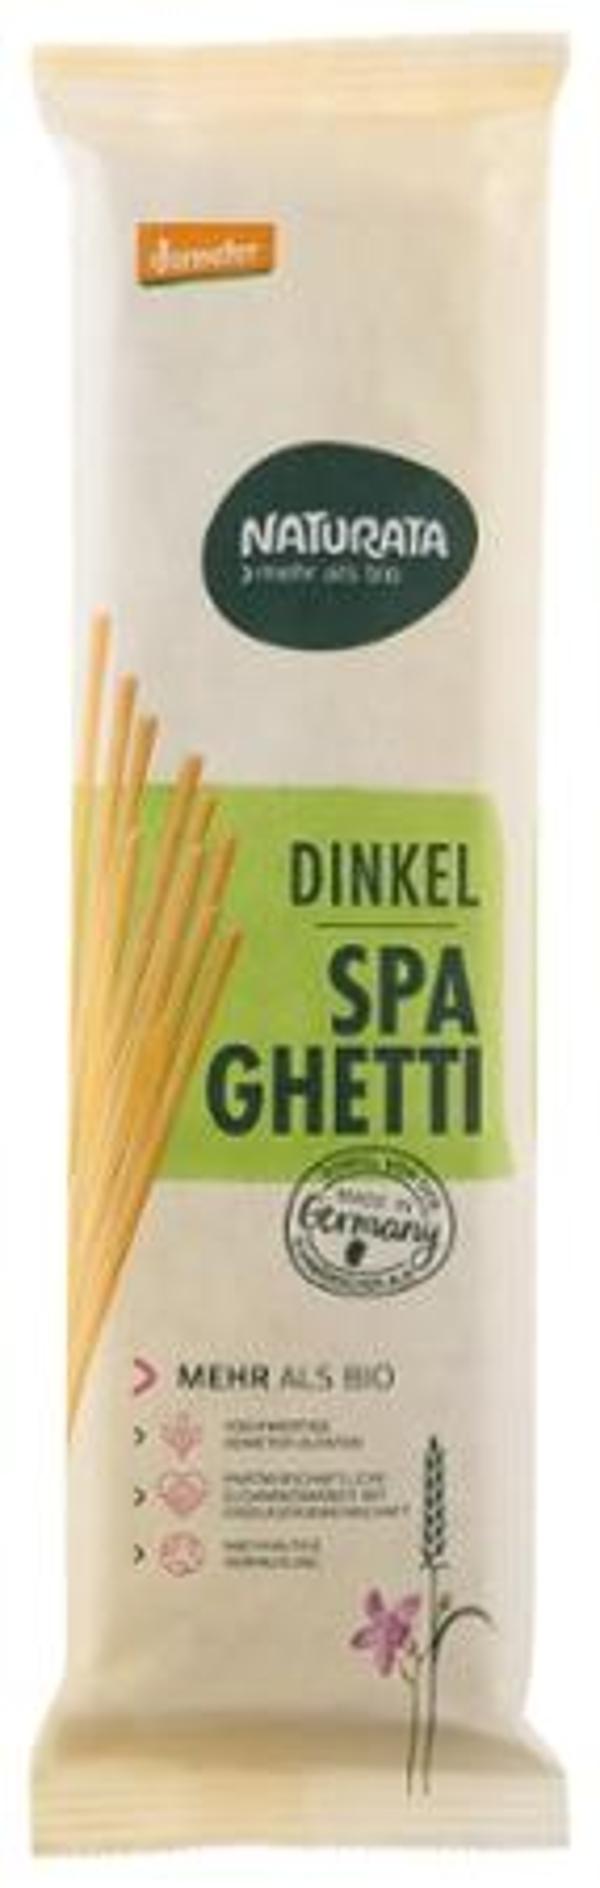 Produktfoto zu Spaghetti Dinkel hell 500 g